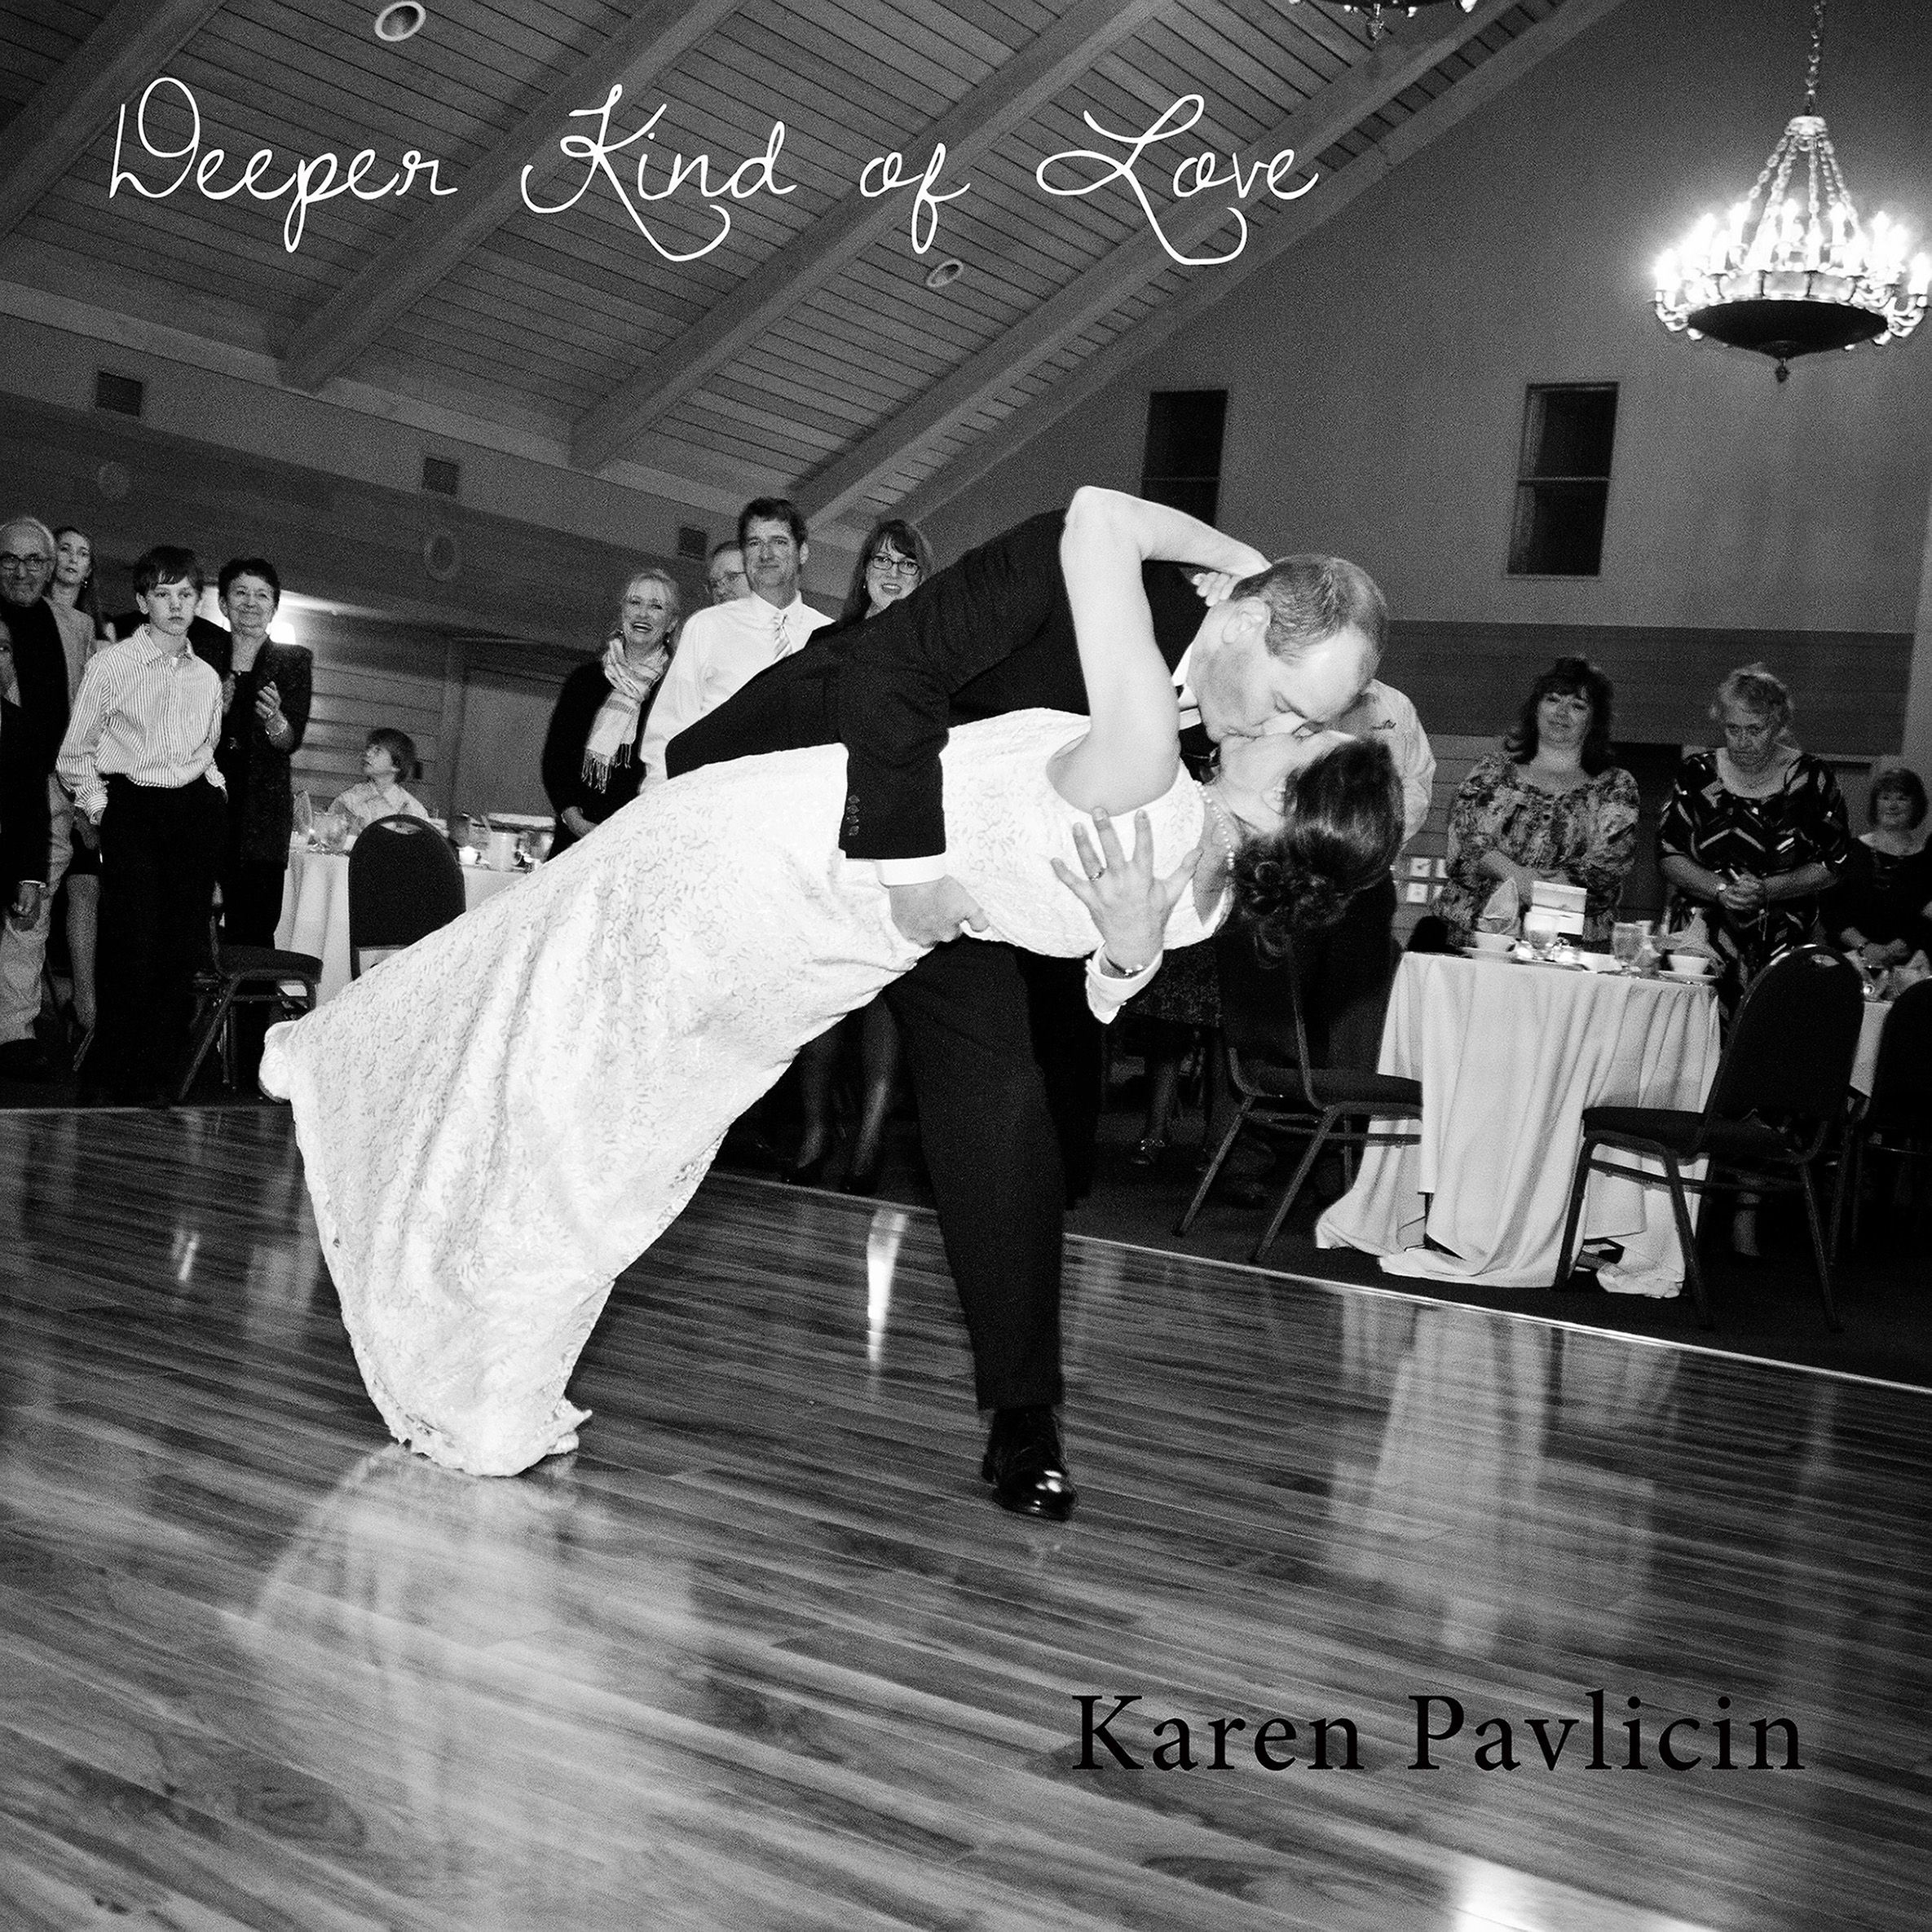 Deeper Kind of Love (song) by Karen Pavlicin